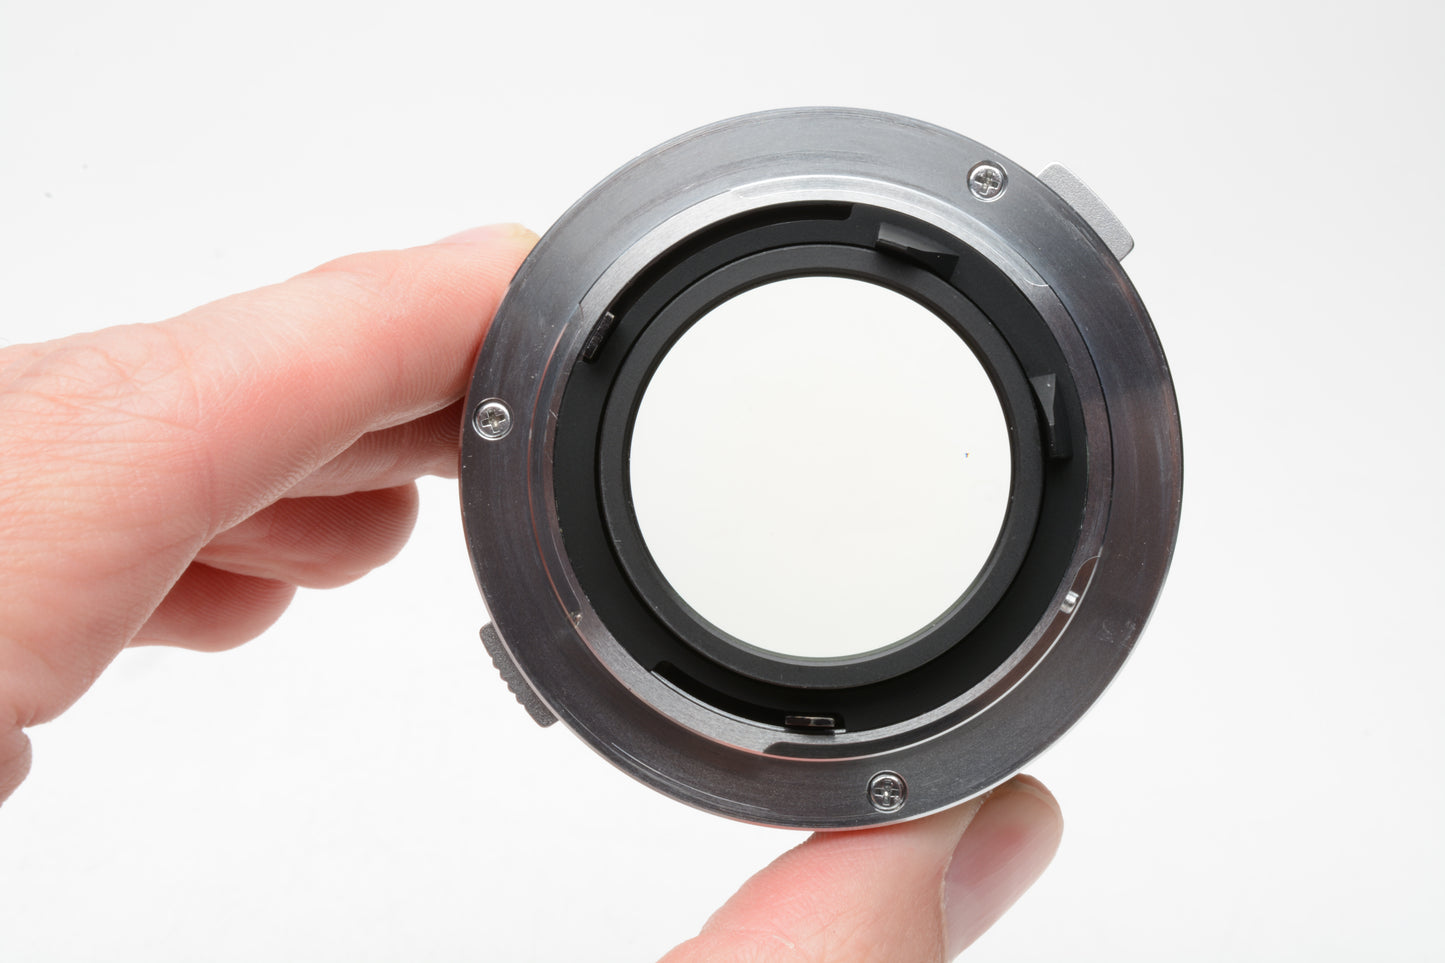 Olympus OM Auto-S 50mm f1.4 prime lens, caps + polarizing and lens hood, Mint-